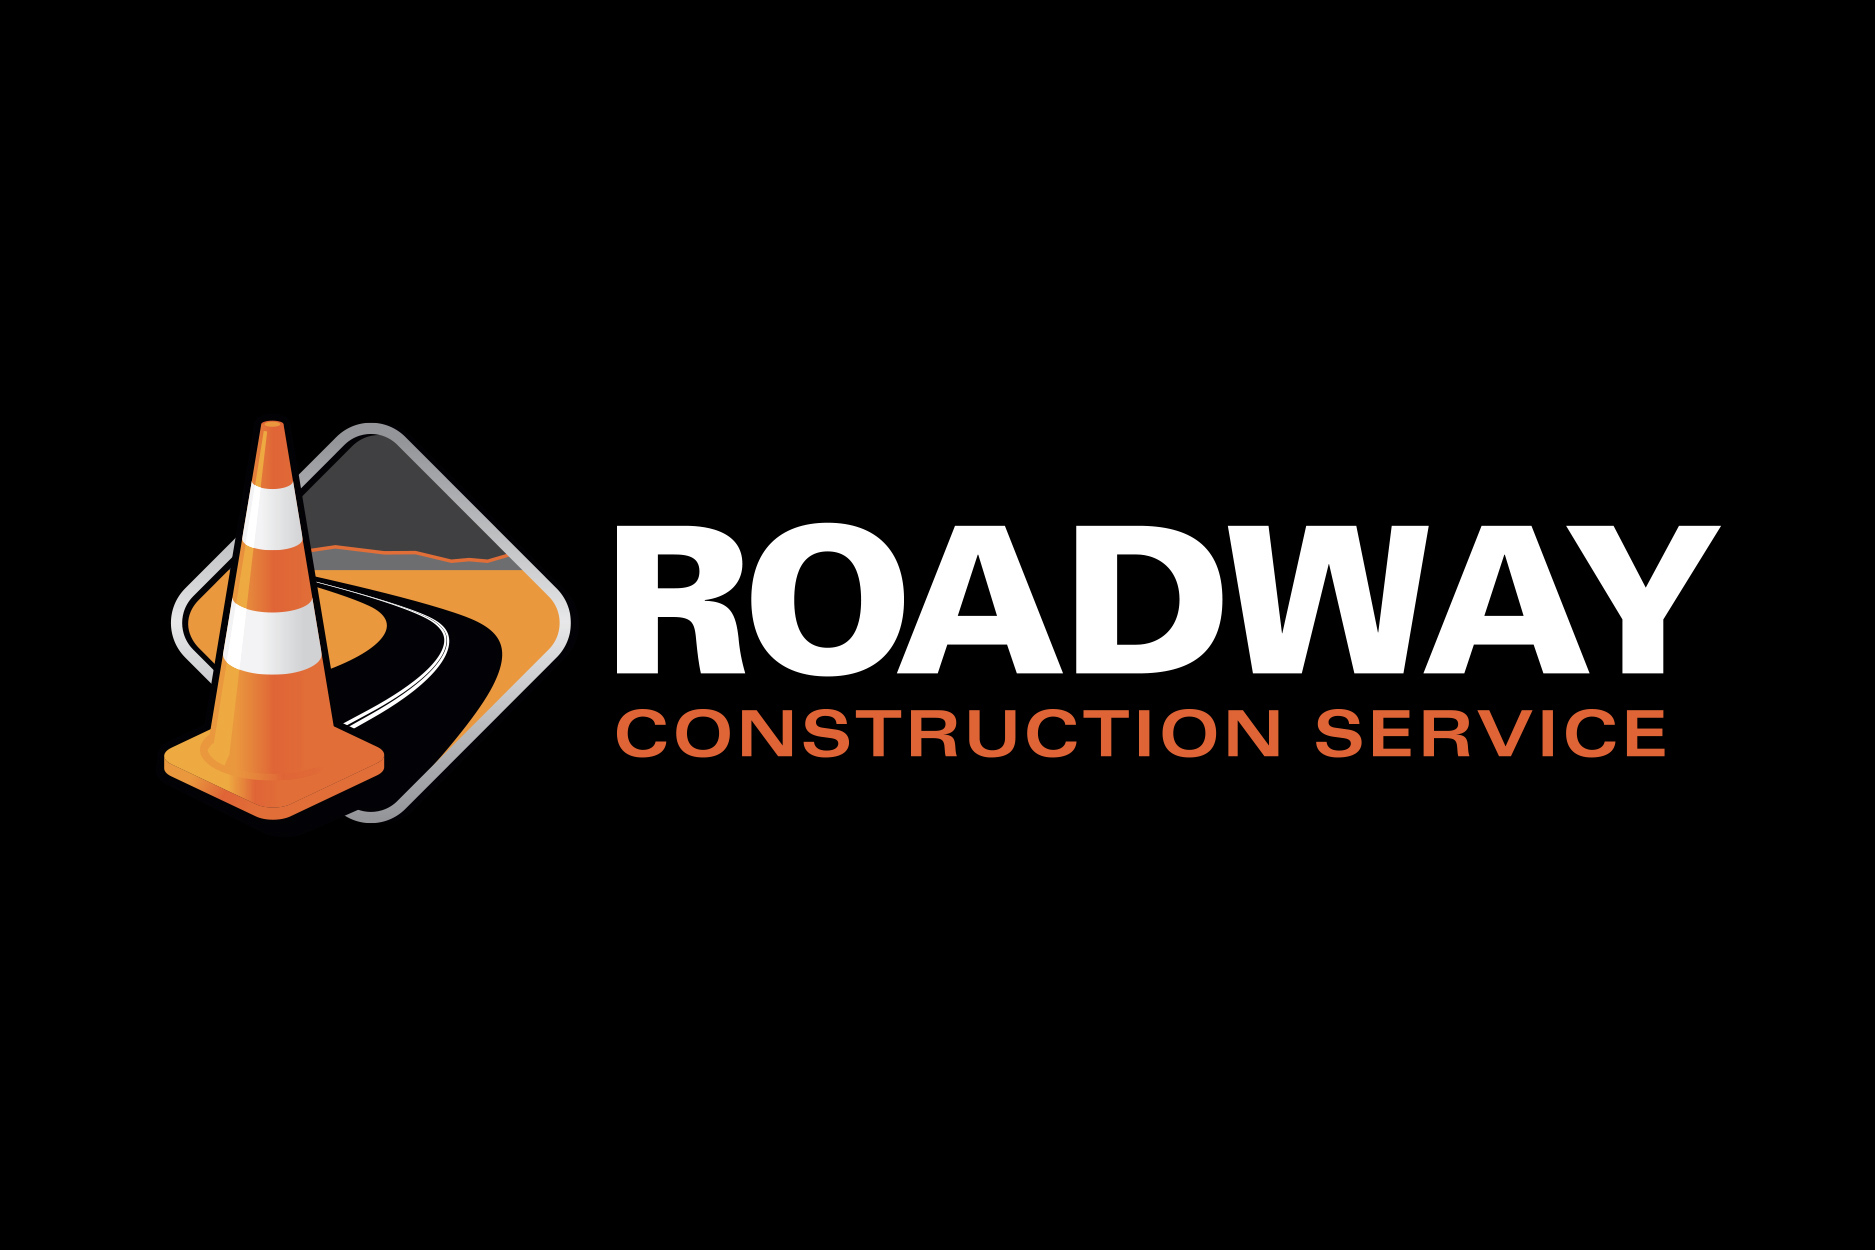 roadway construction service logo design